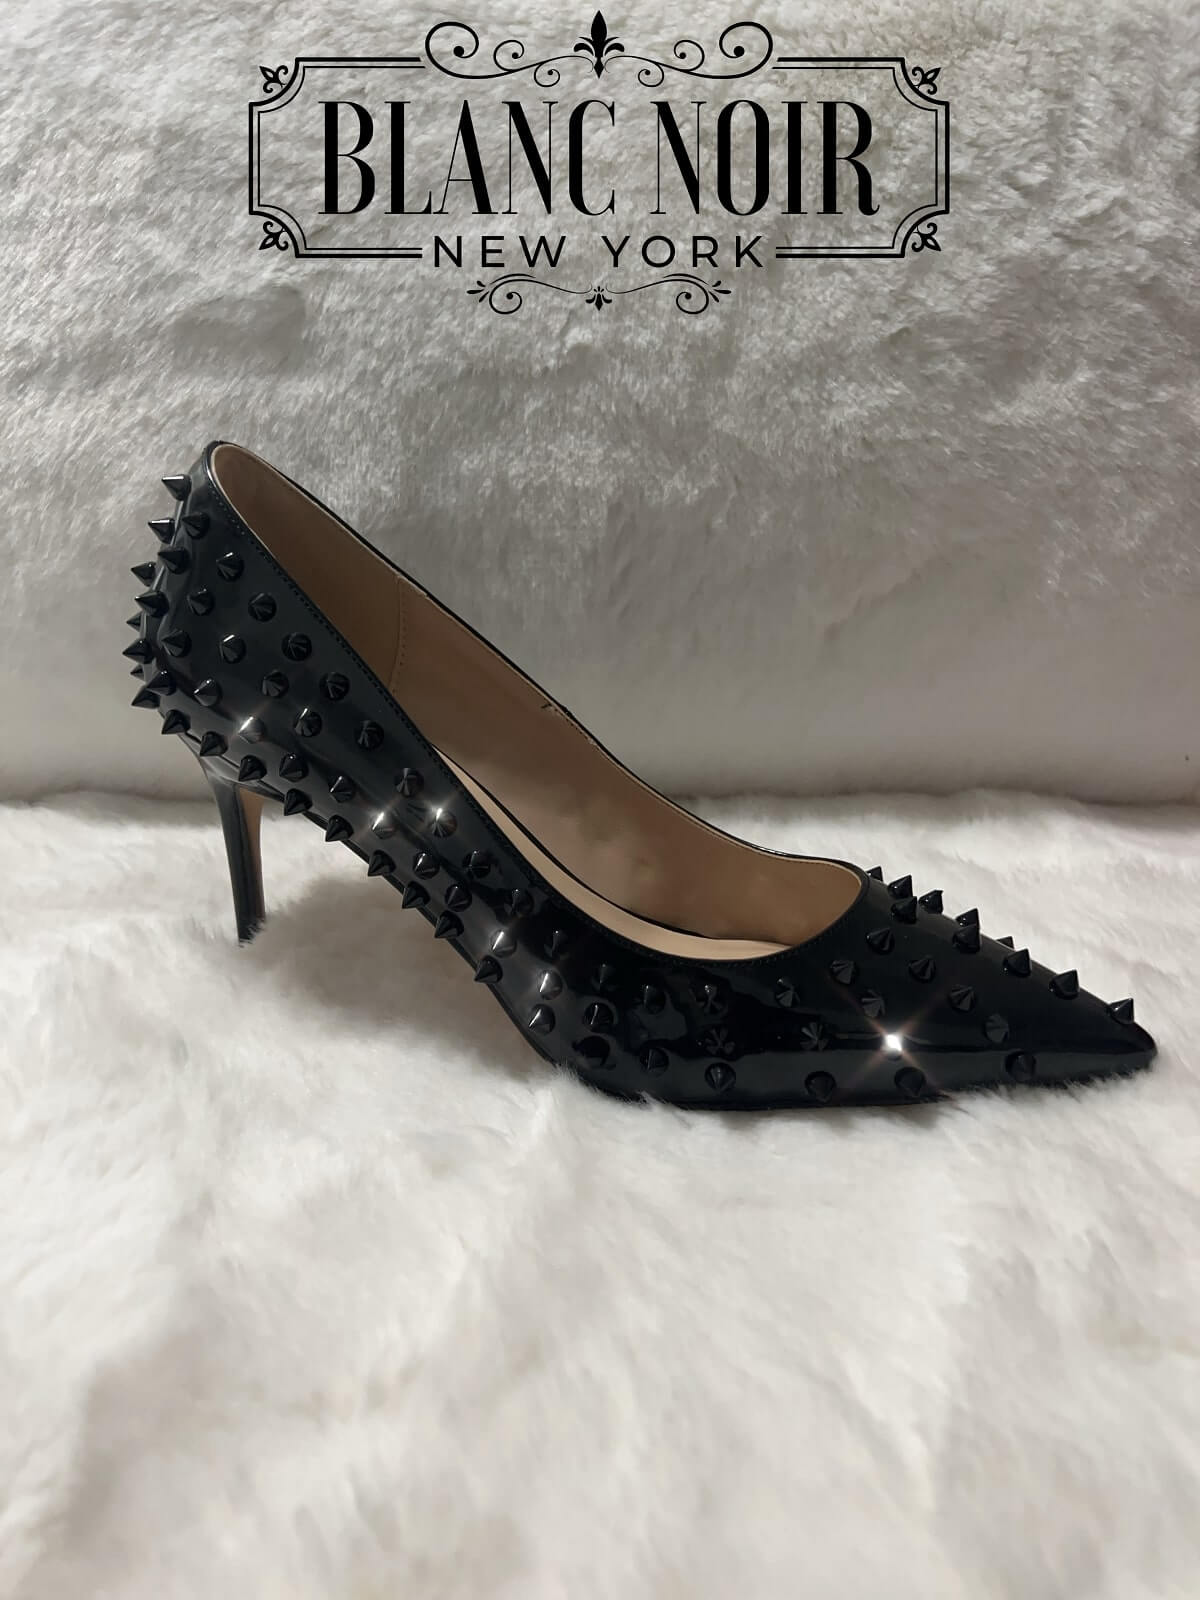 Goldie Lox - Blanc Noir New York